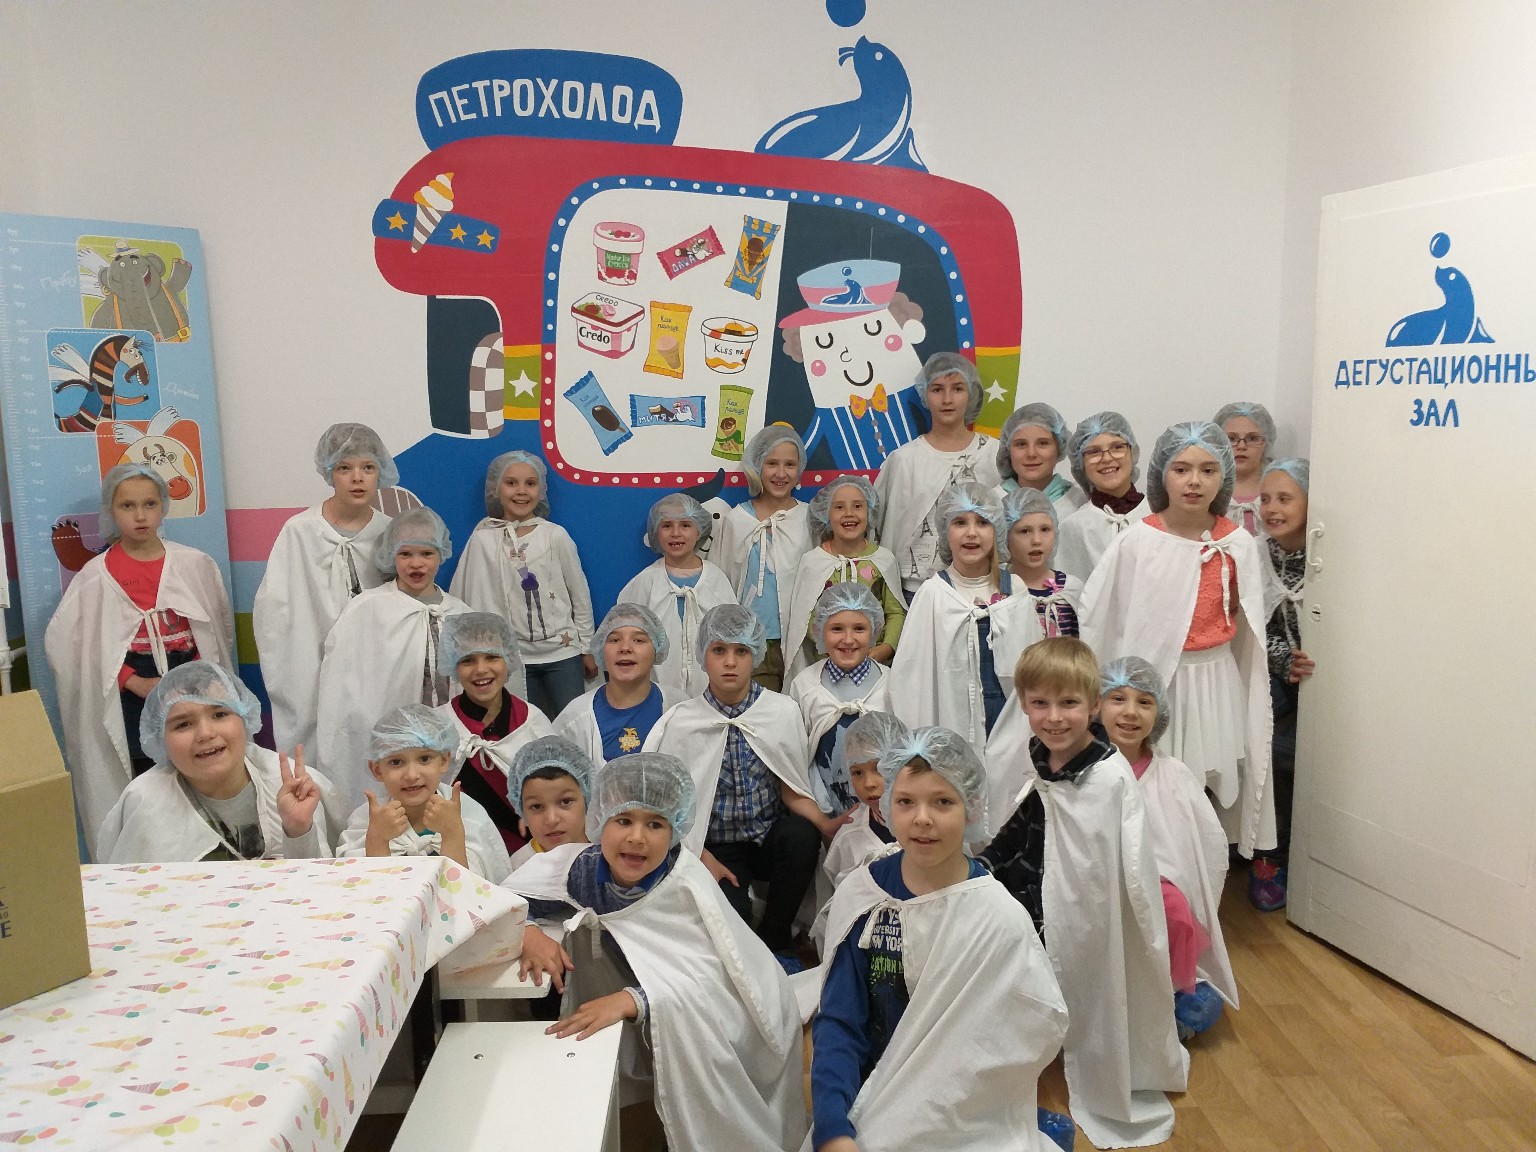 14 июня ребята Центра семьи посетили фабрику  мороженого ООО “Петрохолод”